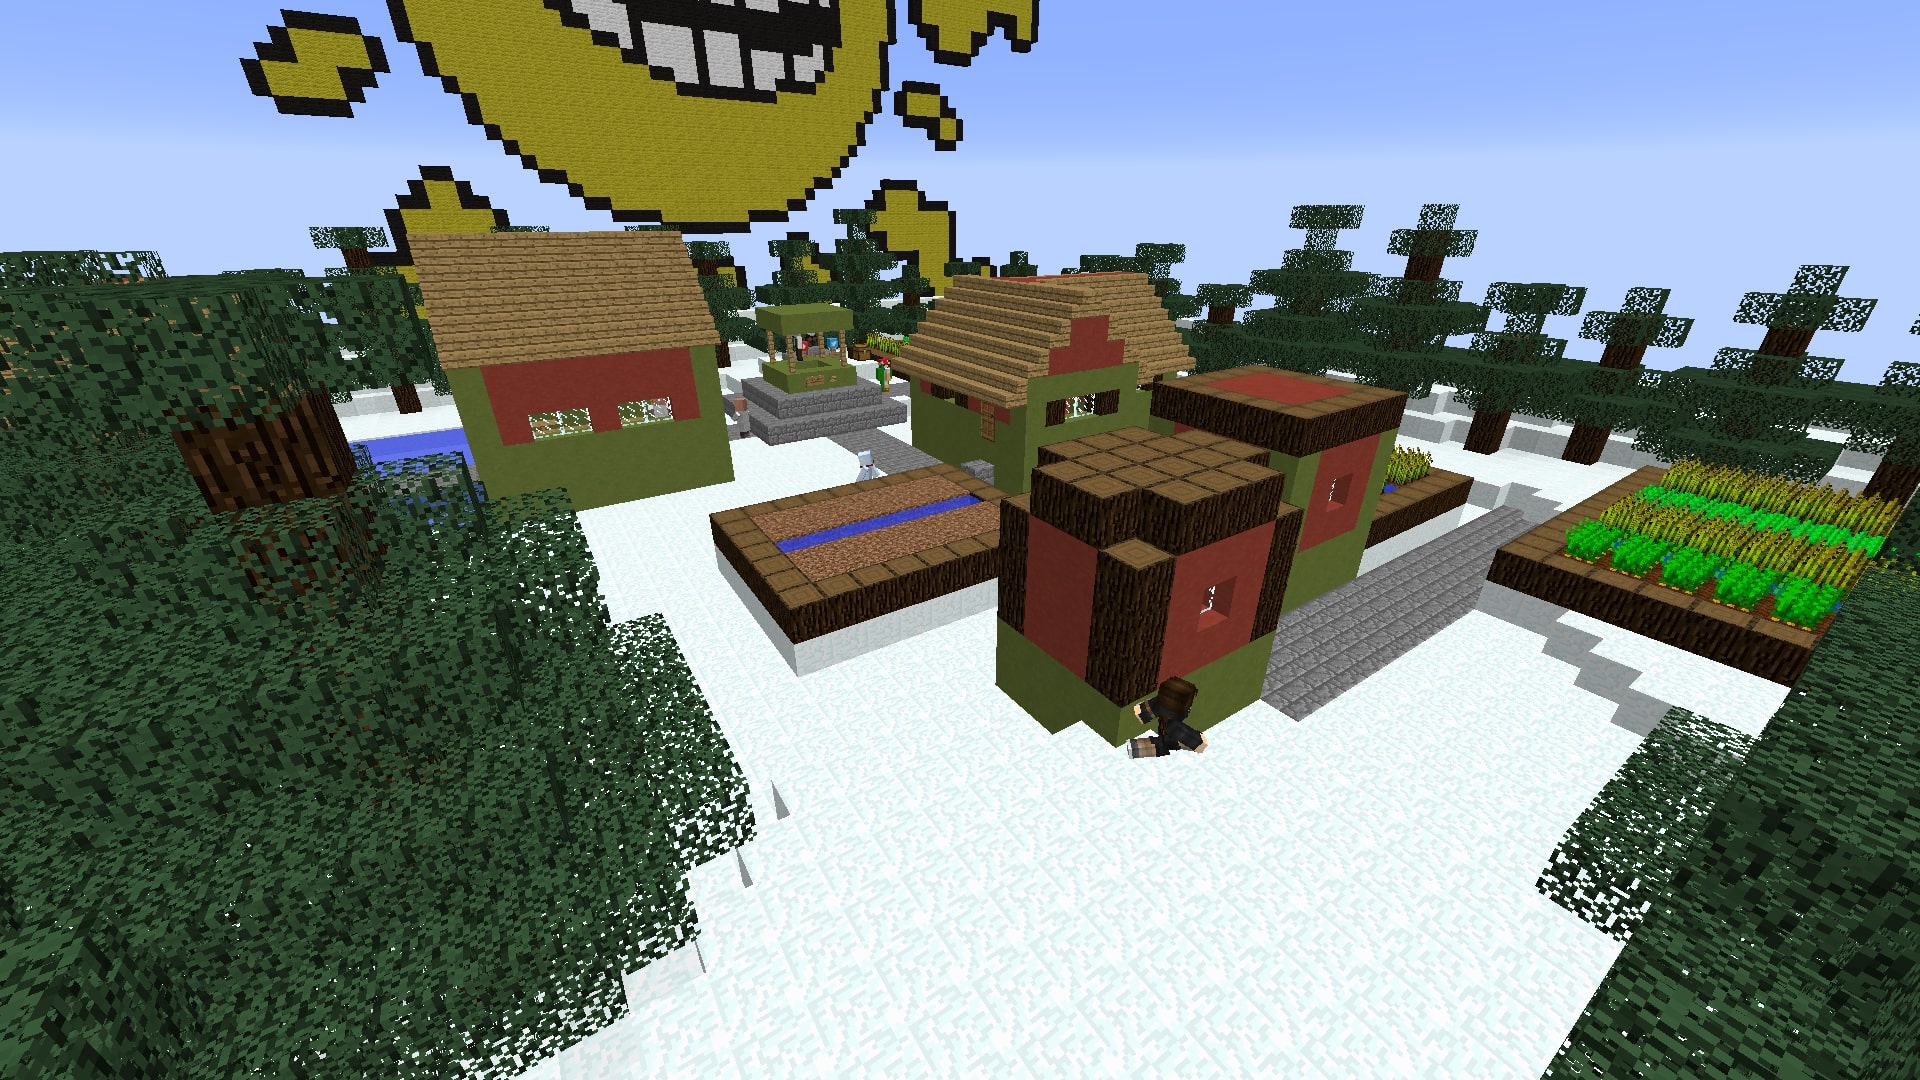 A Winter House Minecraft Map